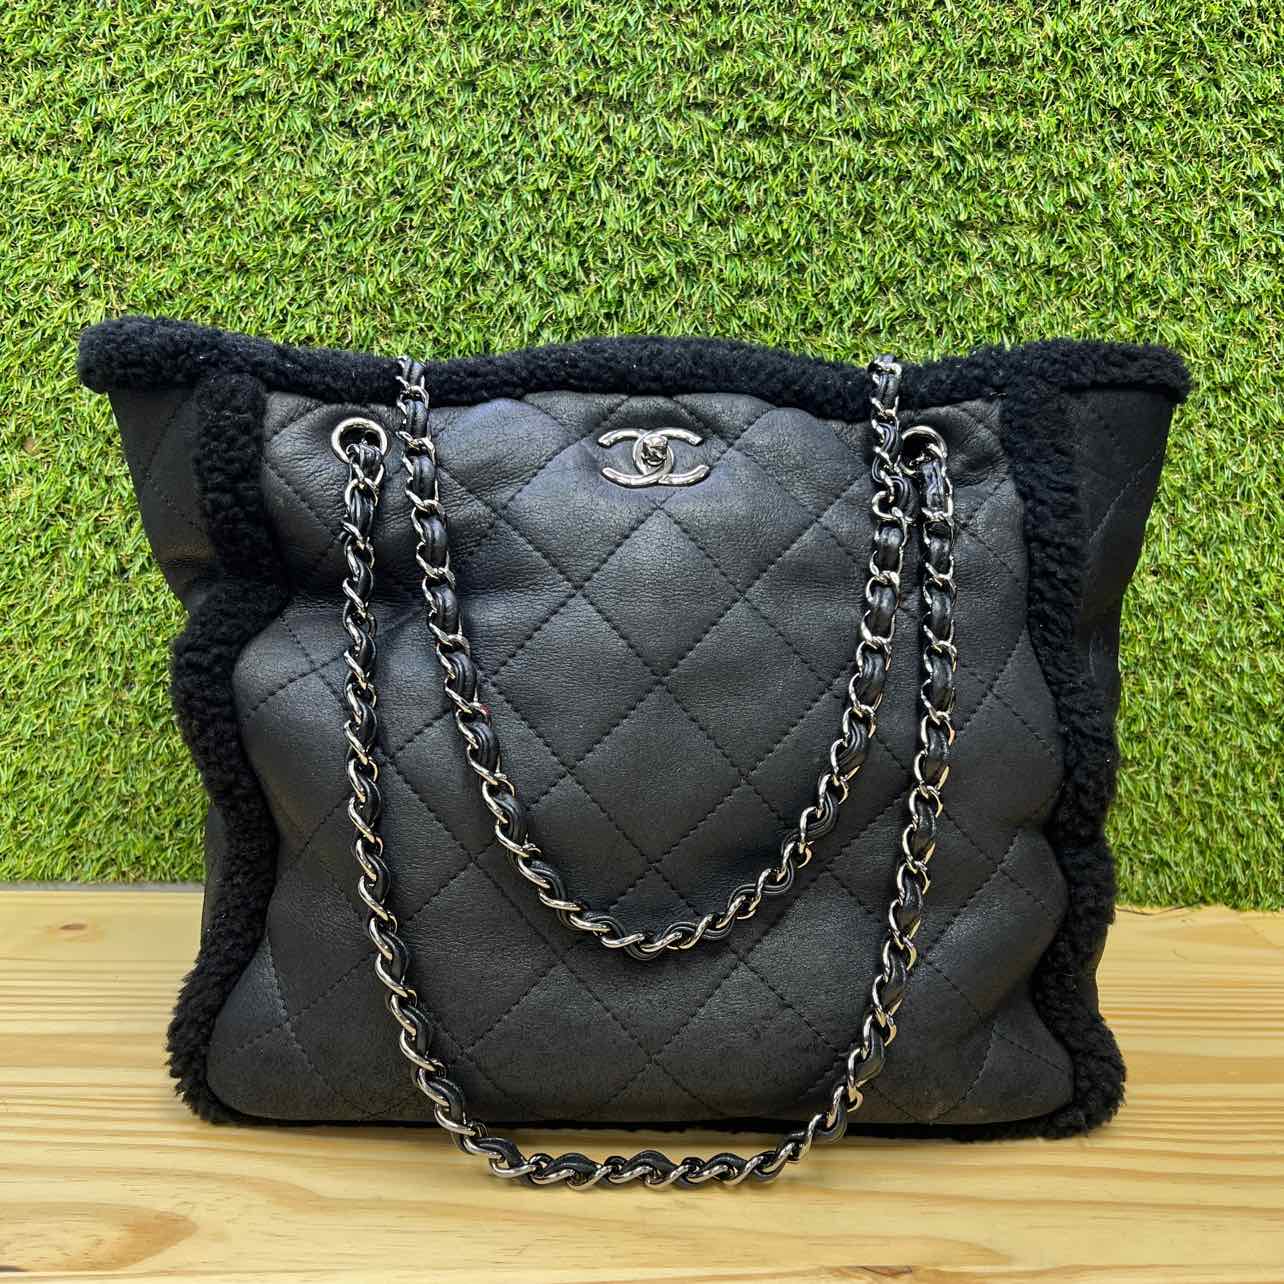 Chanel Handbag &quot;SHEARLING&quot; Used Black